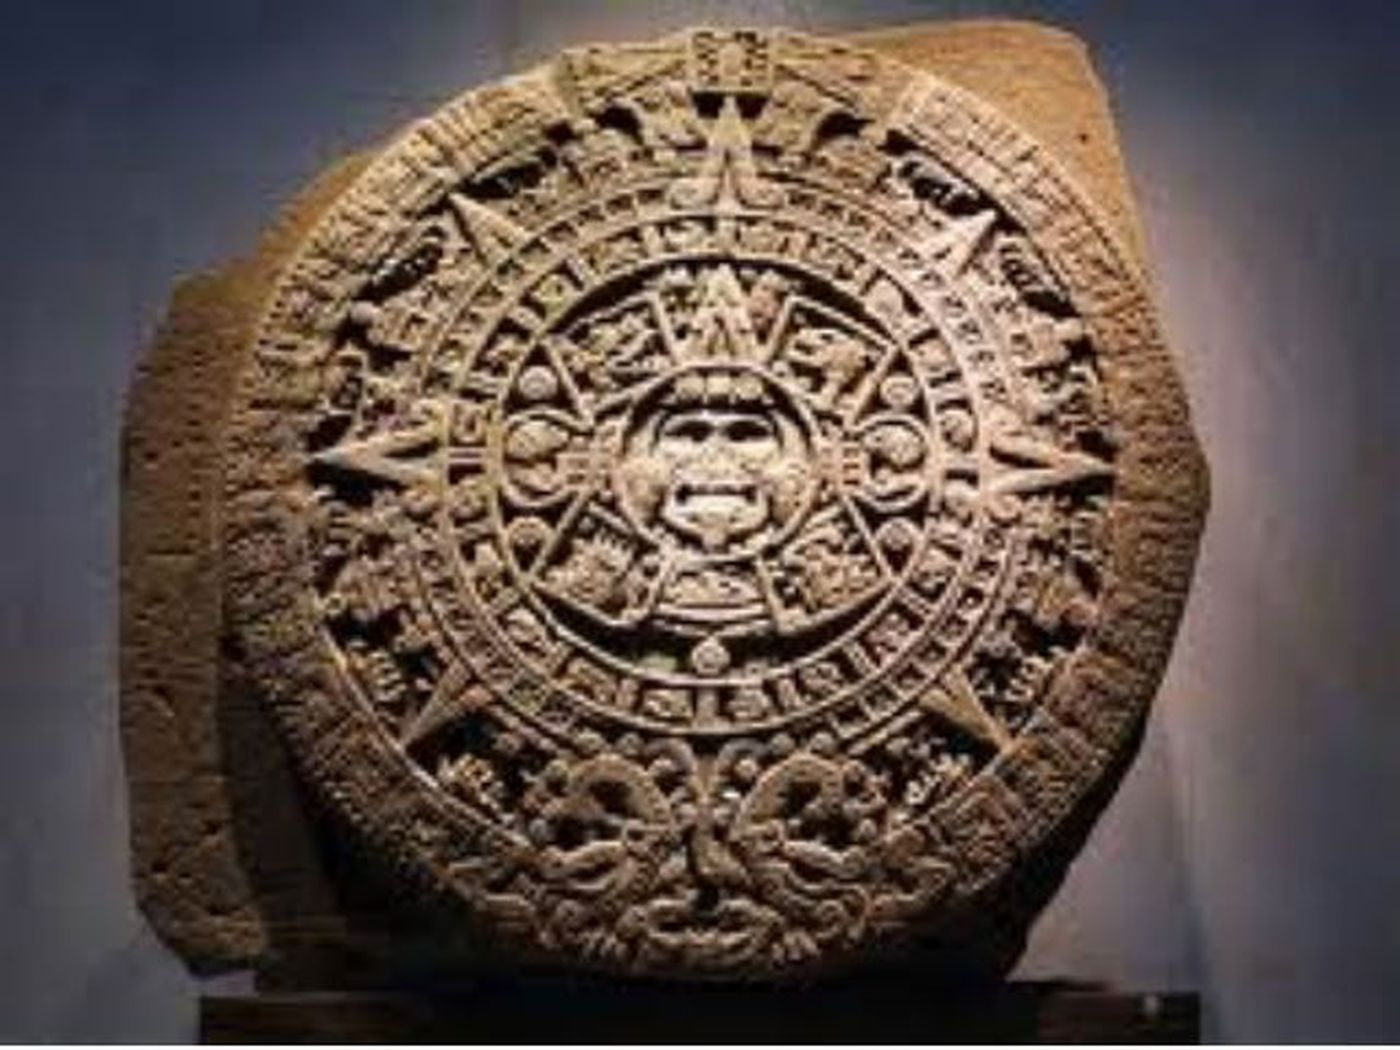 Mayan Calendar End Of The World Myth